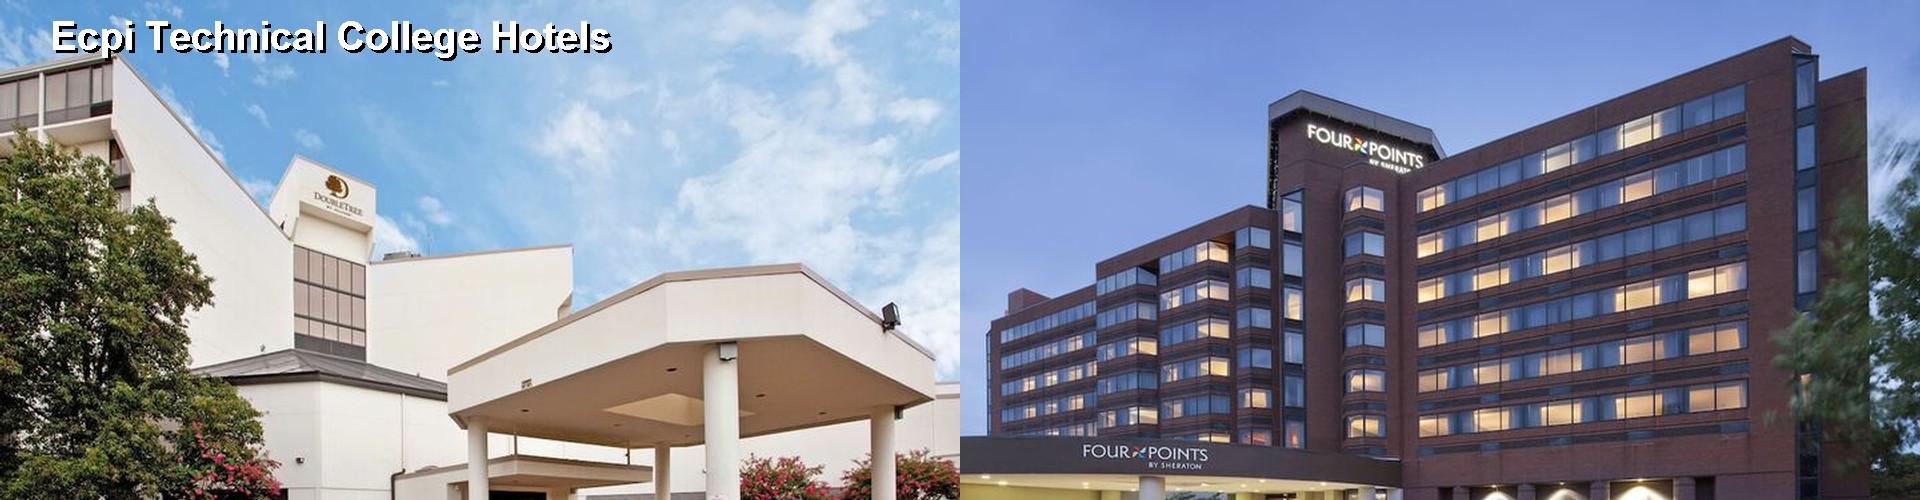 5 Best Hotels near Ecpi Technical College